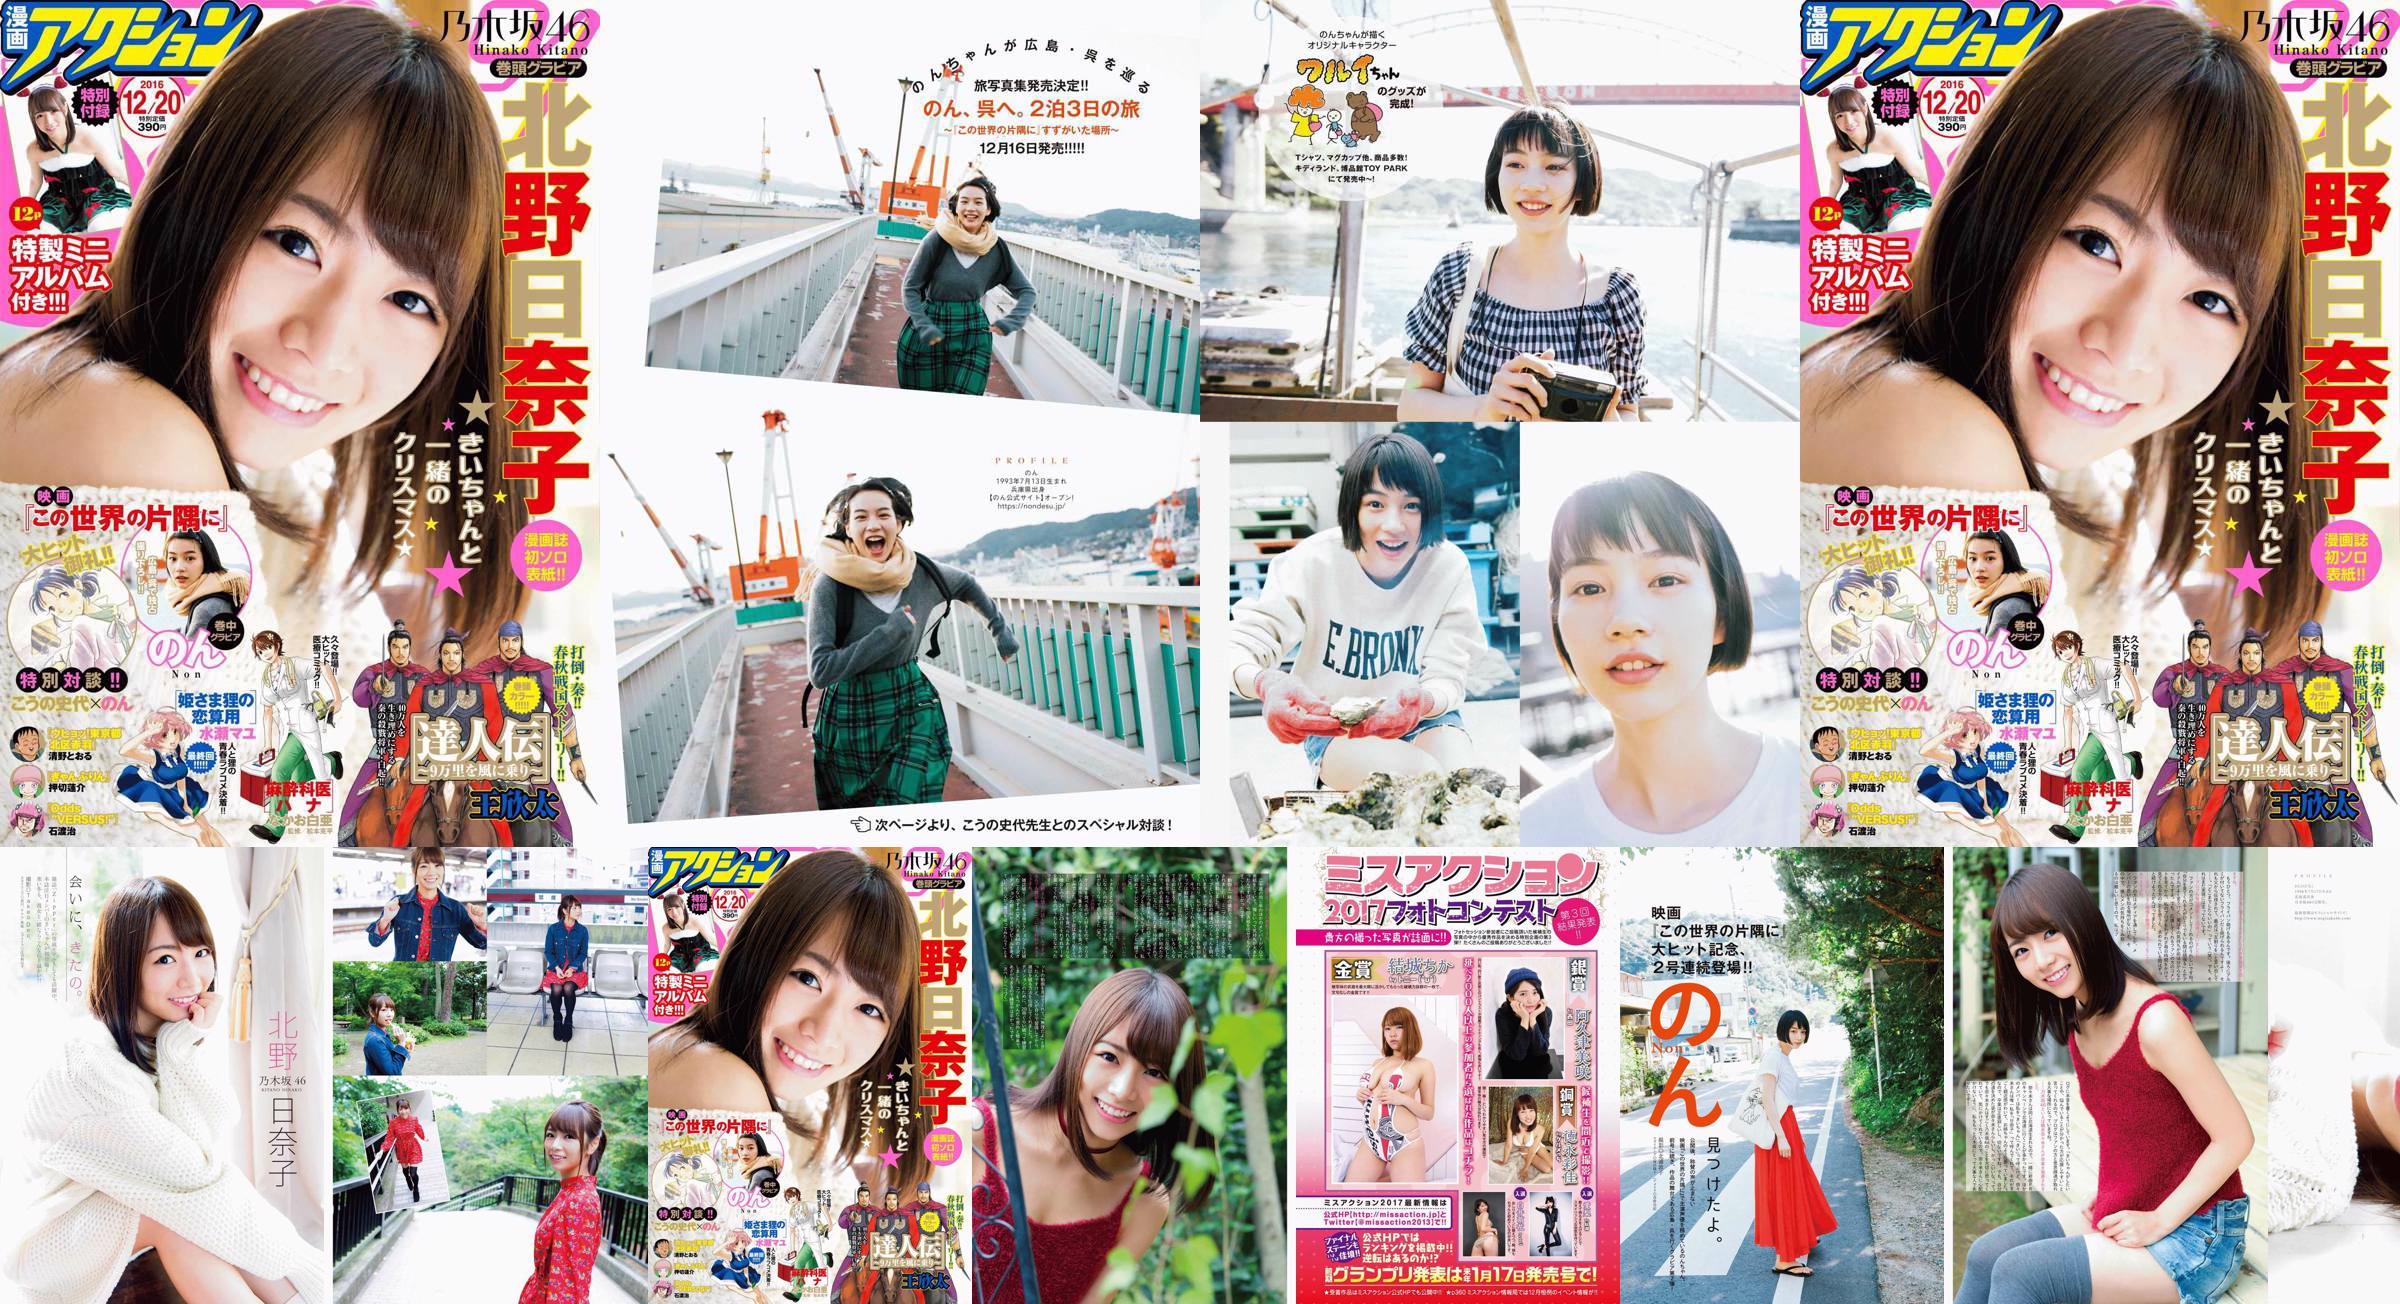 [Manga Action] Kitano Hinako のん 2016 No.24 Photo Magazine No.7ad3e6 Strona 1